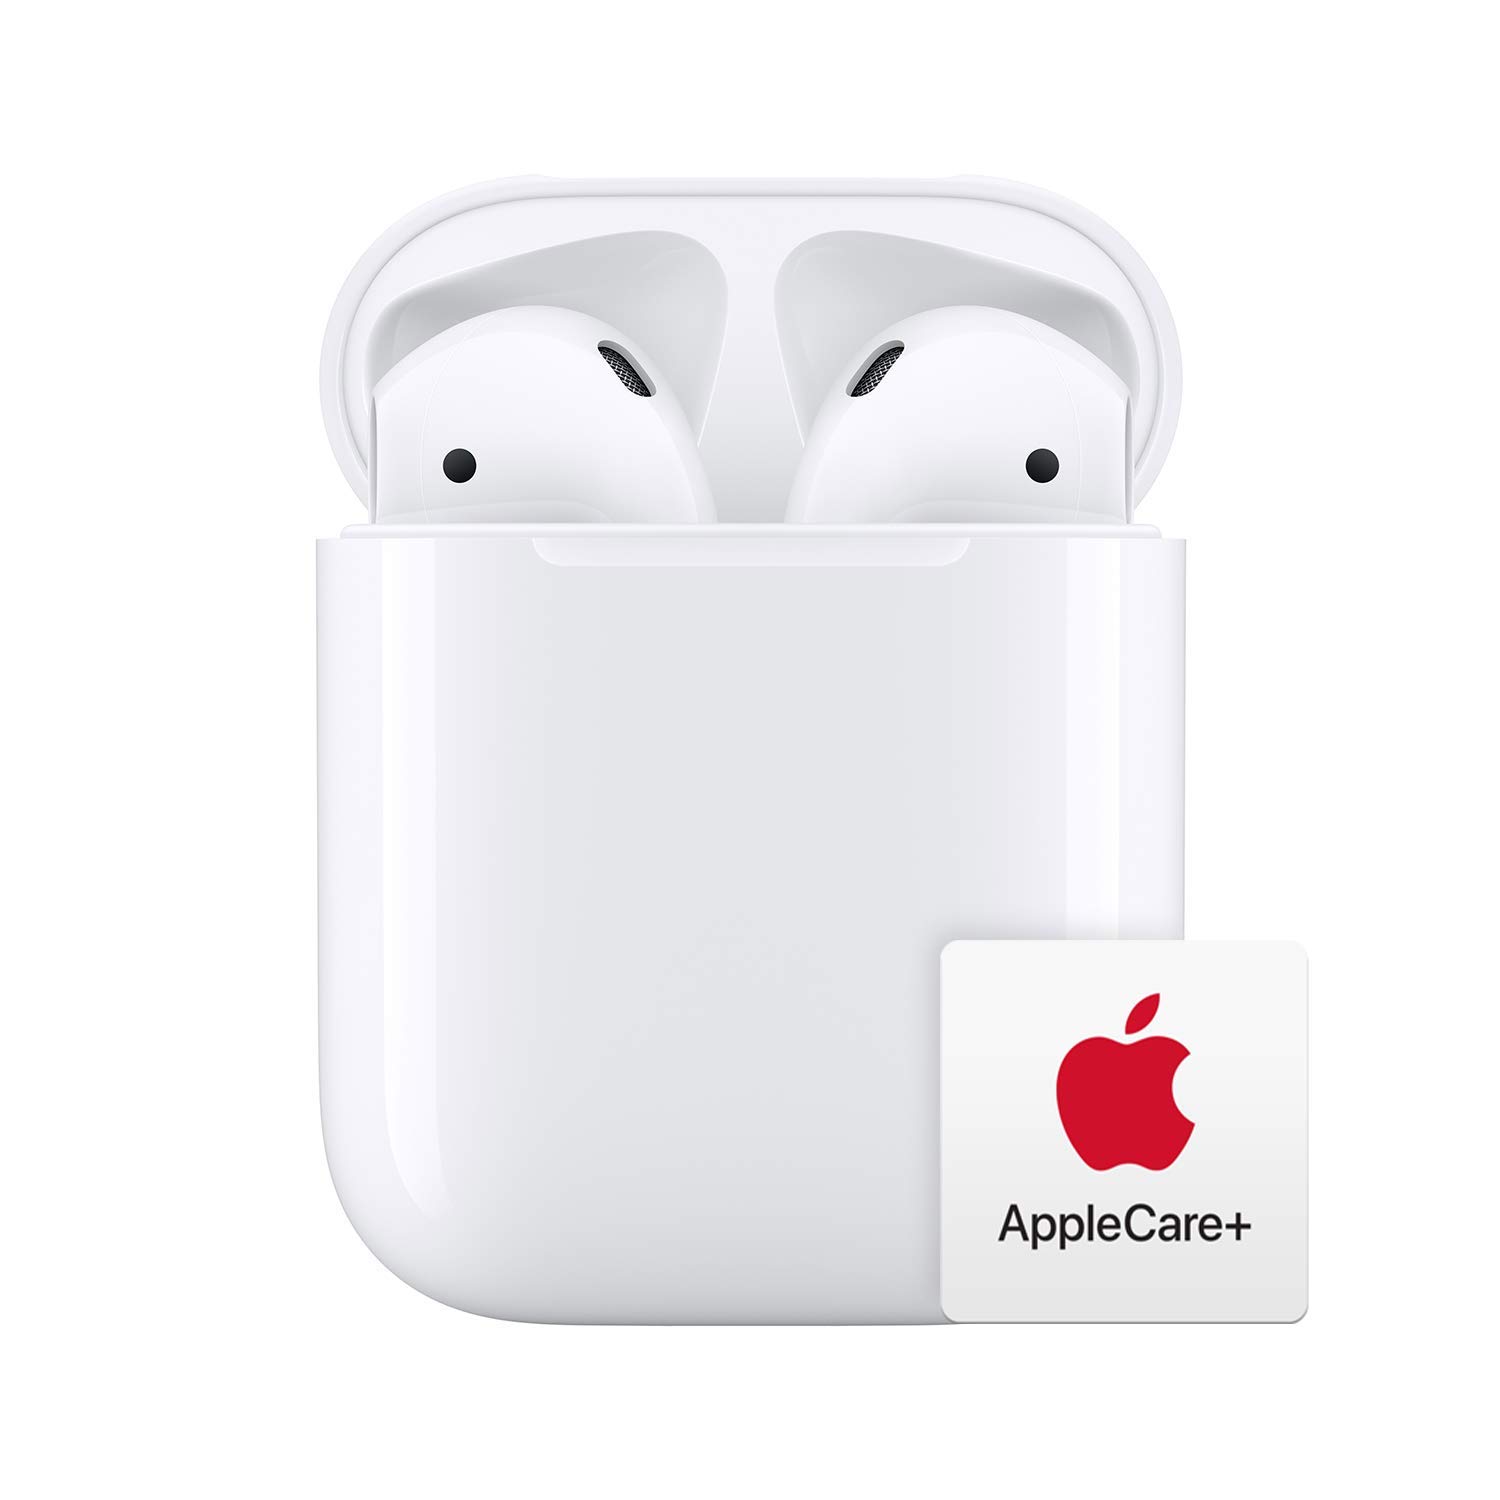 Apple Care+가 포함된 Lightning 충전 케이스가 포함된 AirPods(2세대)...